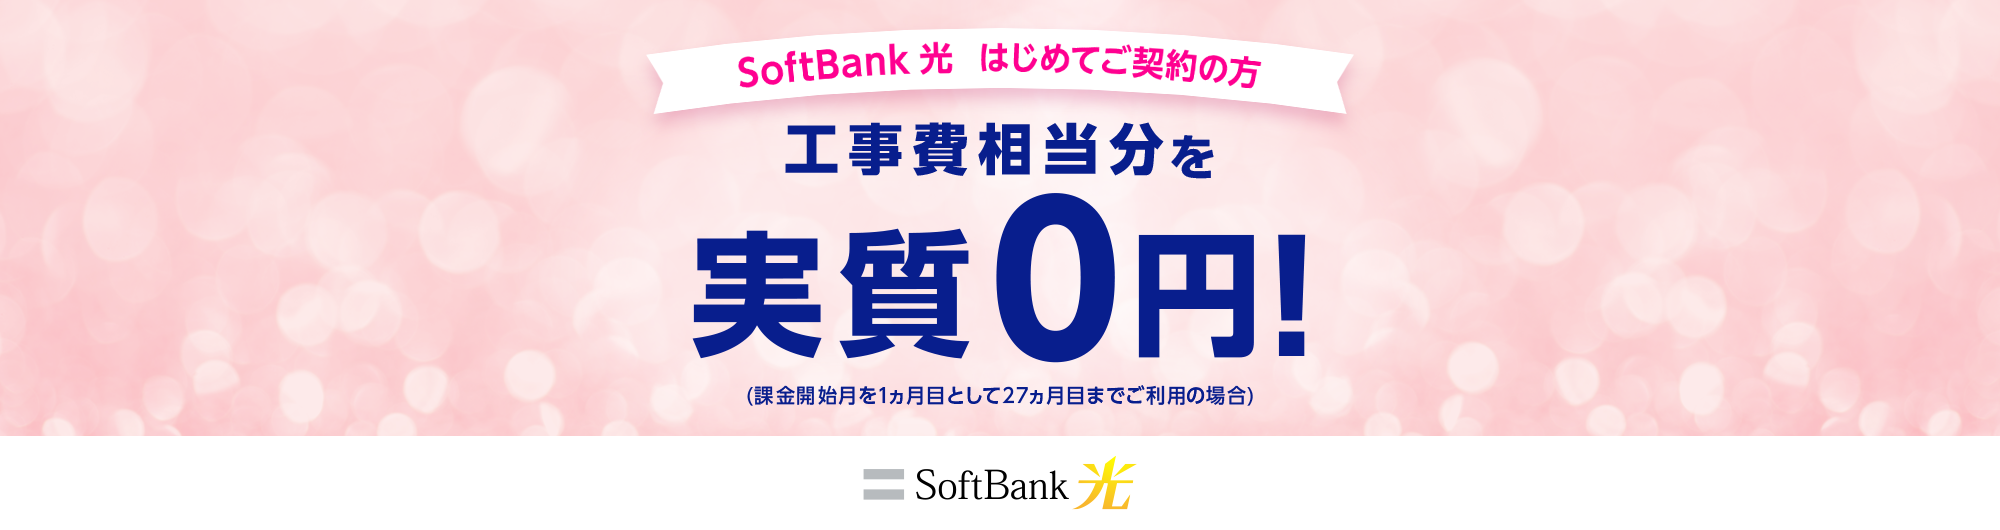 SoftBank 光 はじめてご契約の方 工事費相当分を実質0円！(課金開始月を1ヵ月目として27ヵ月目までご利用の場合)